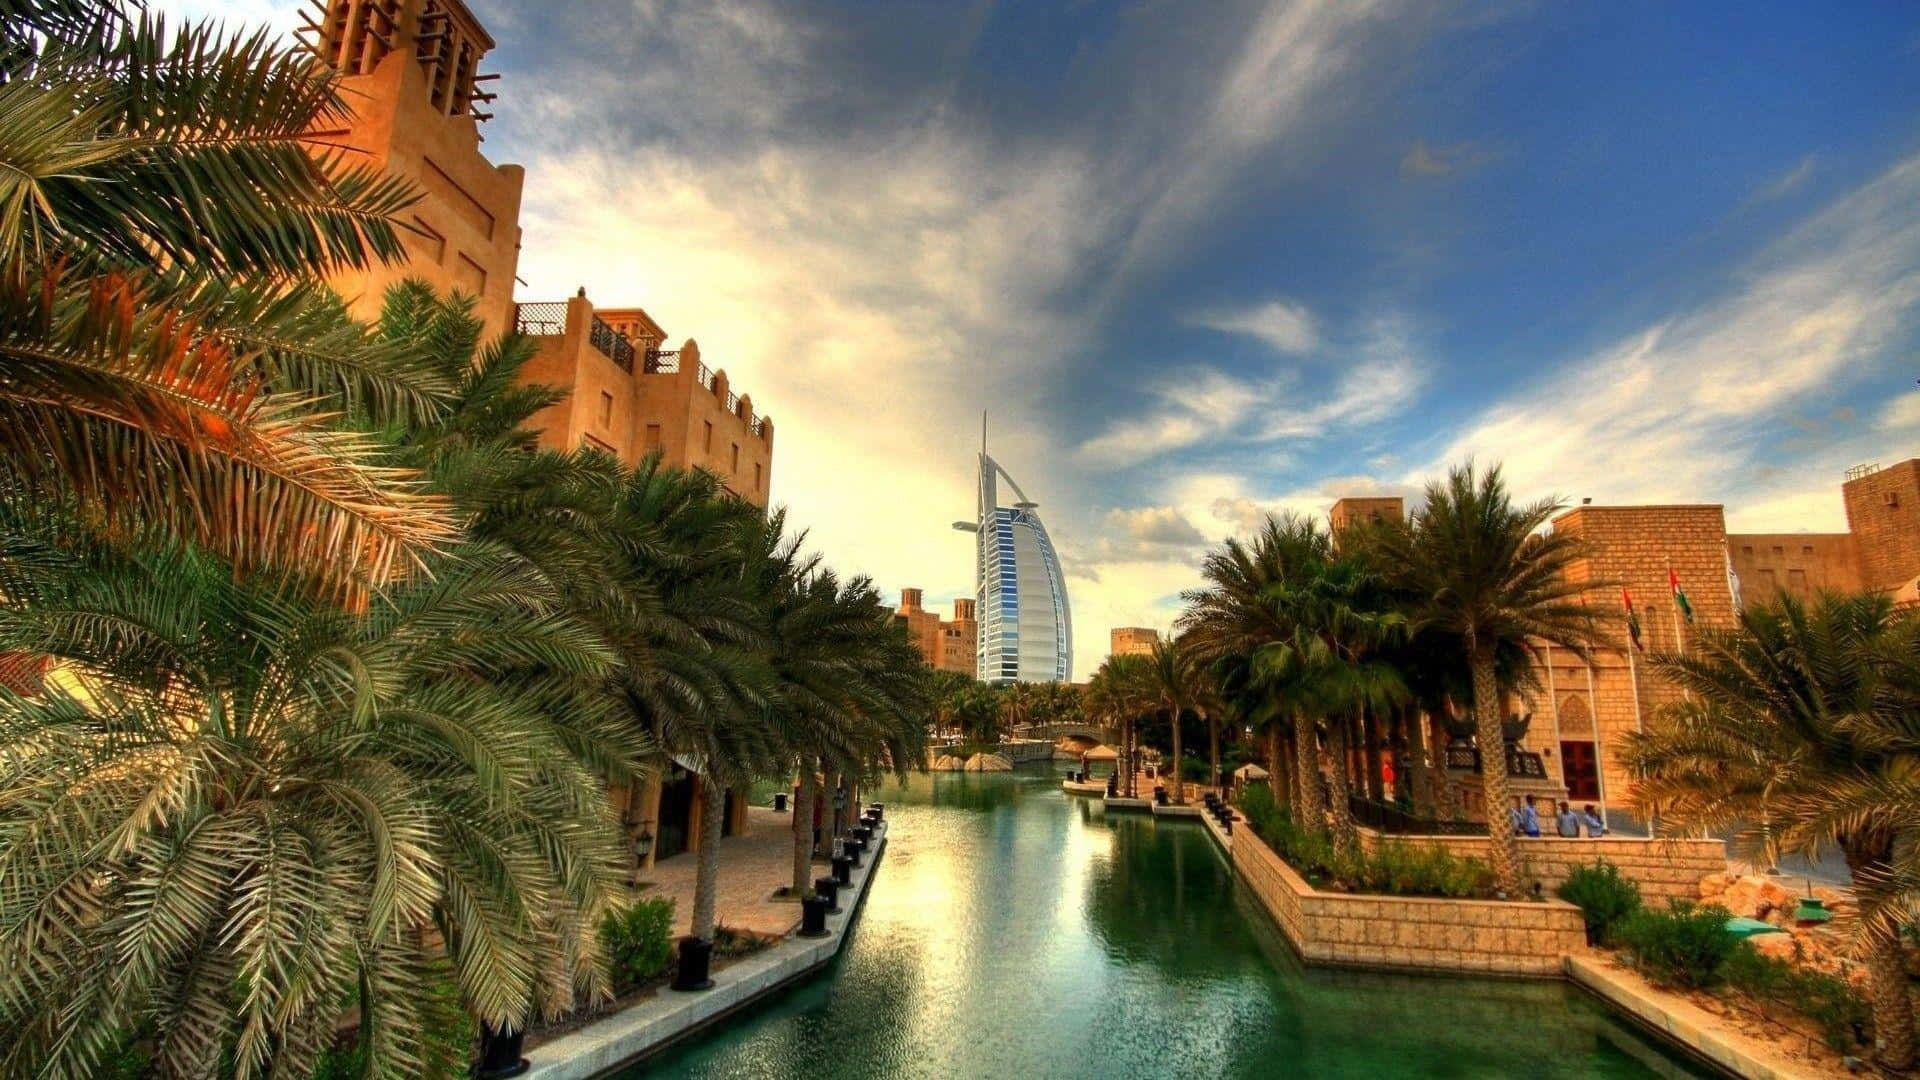 United Arab Emirates: An Impressive Landscape.